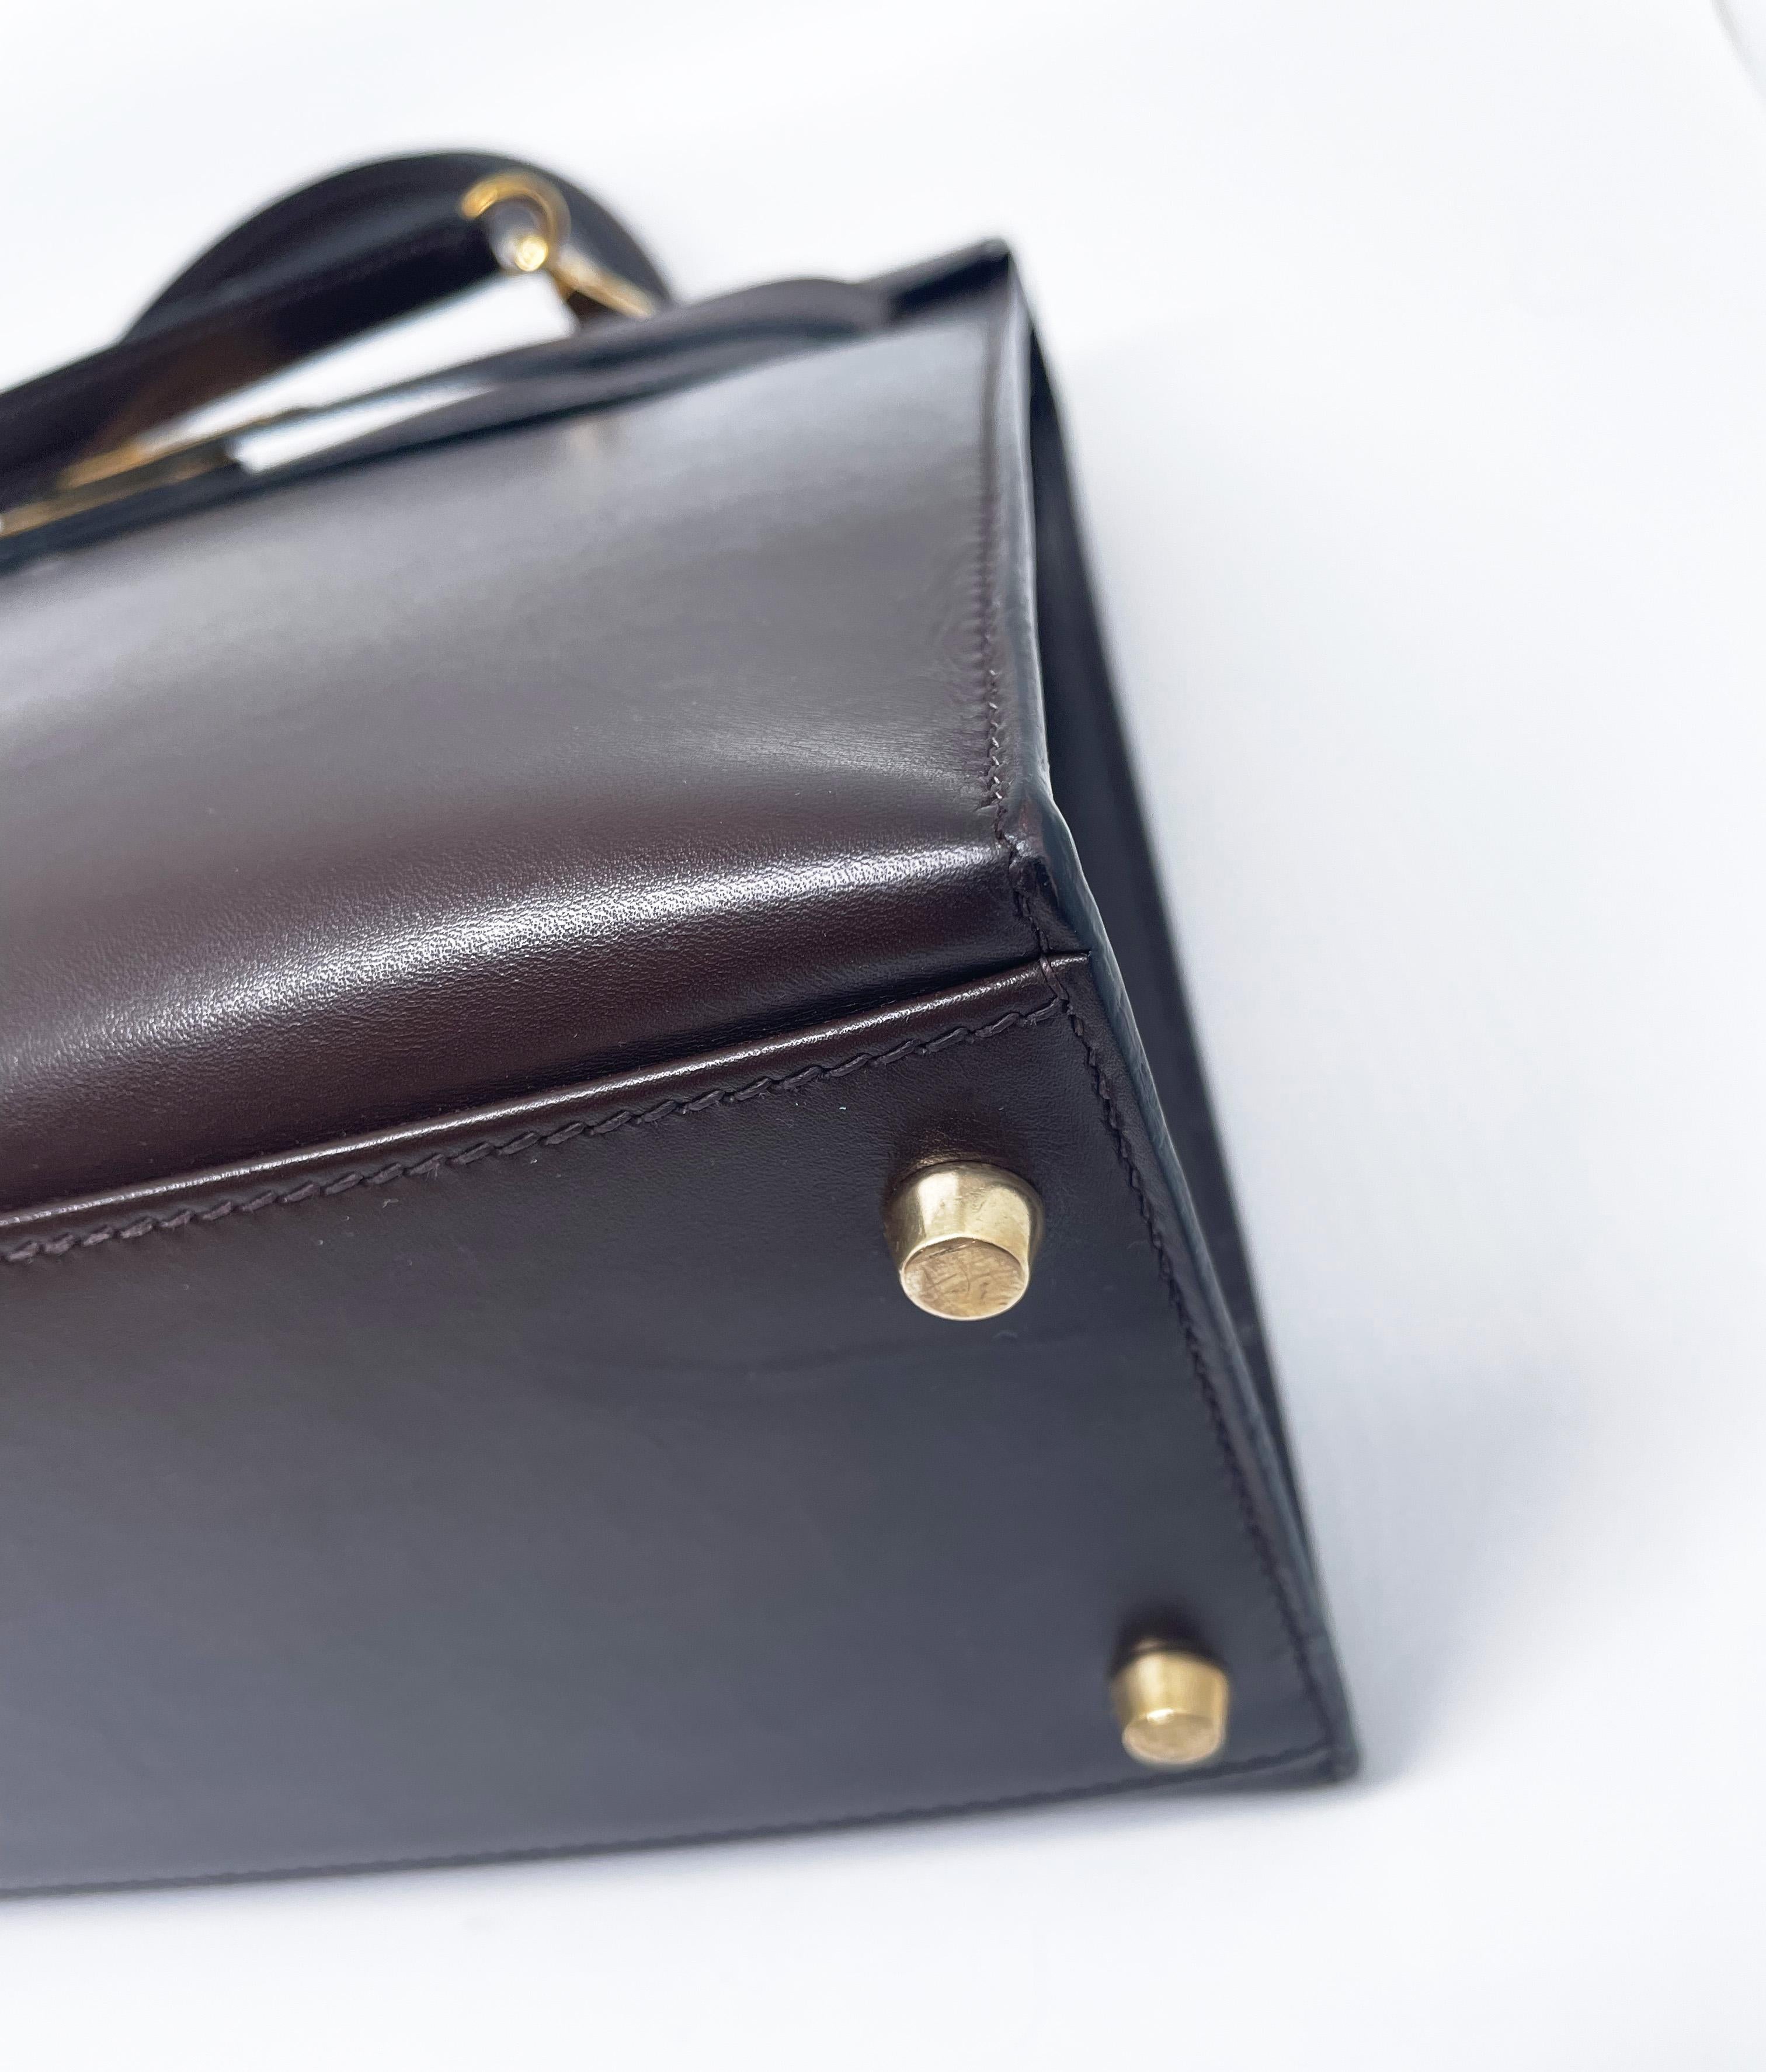 Superb Hermès Kelly saddler handbag 32 cm in brown box 4